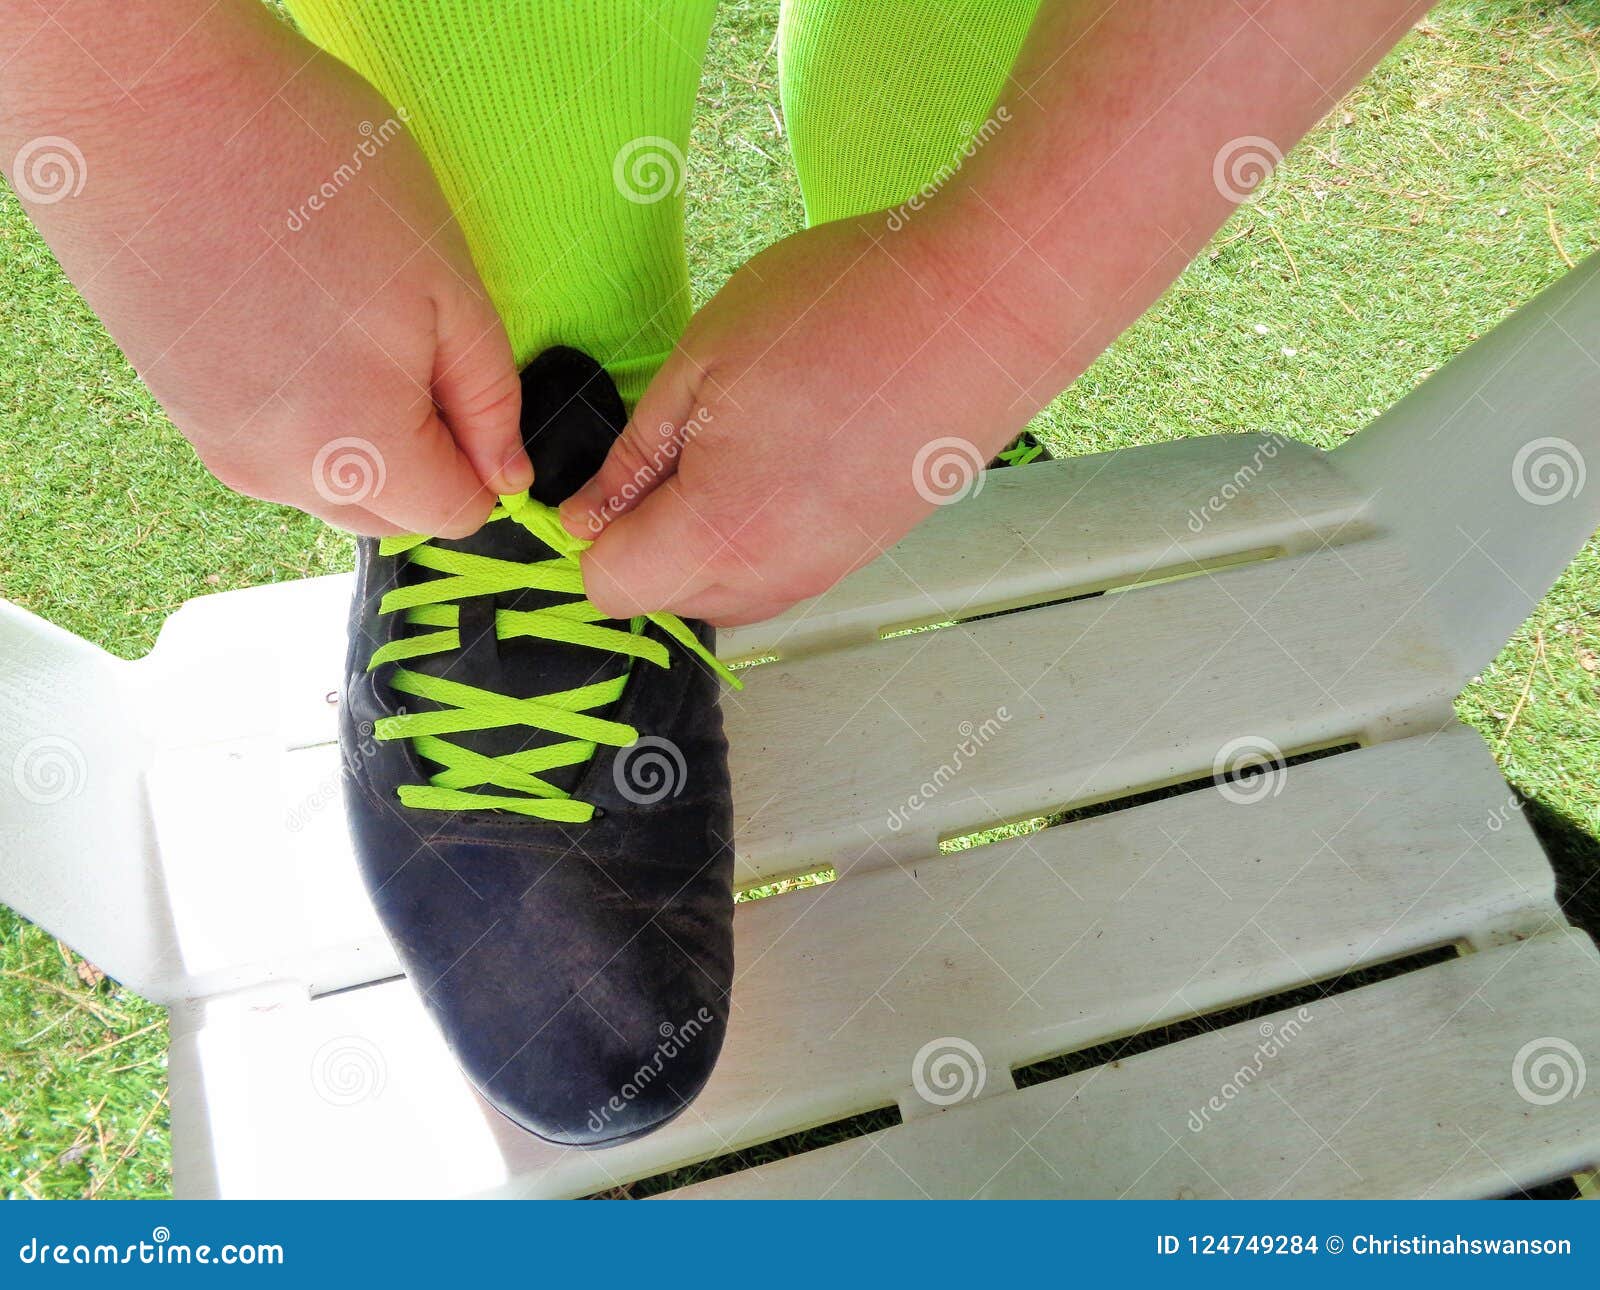 soccer shoelaces